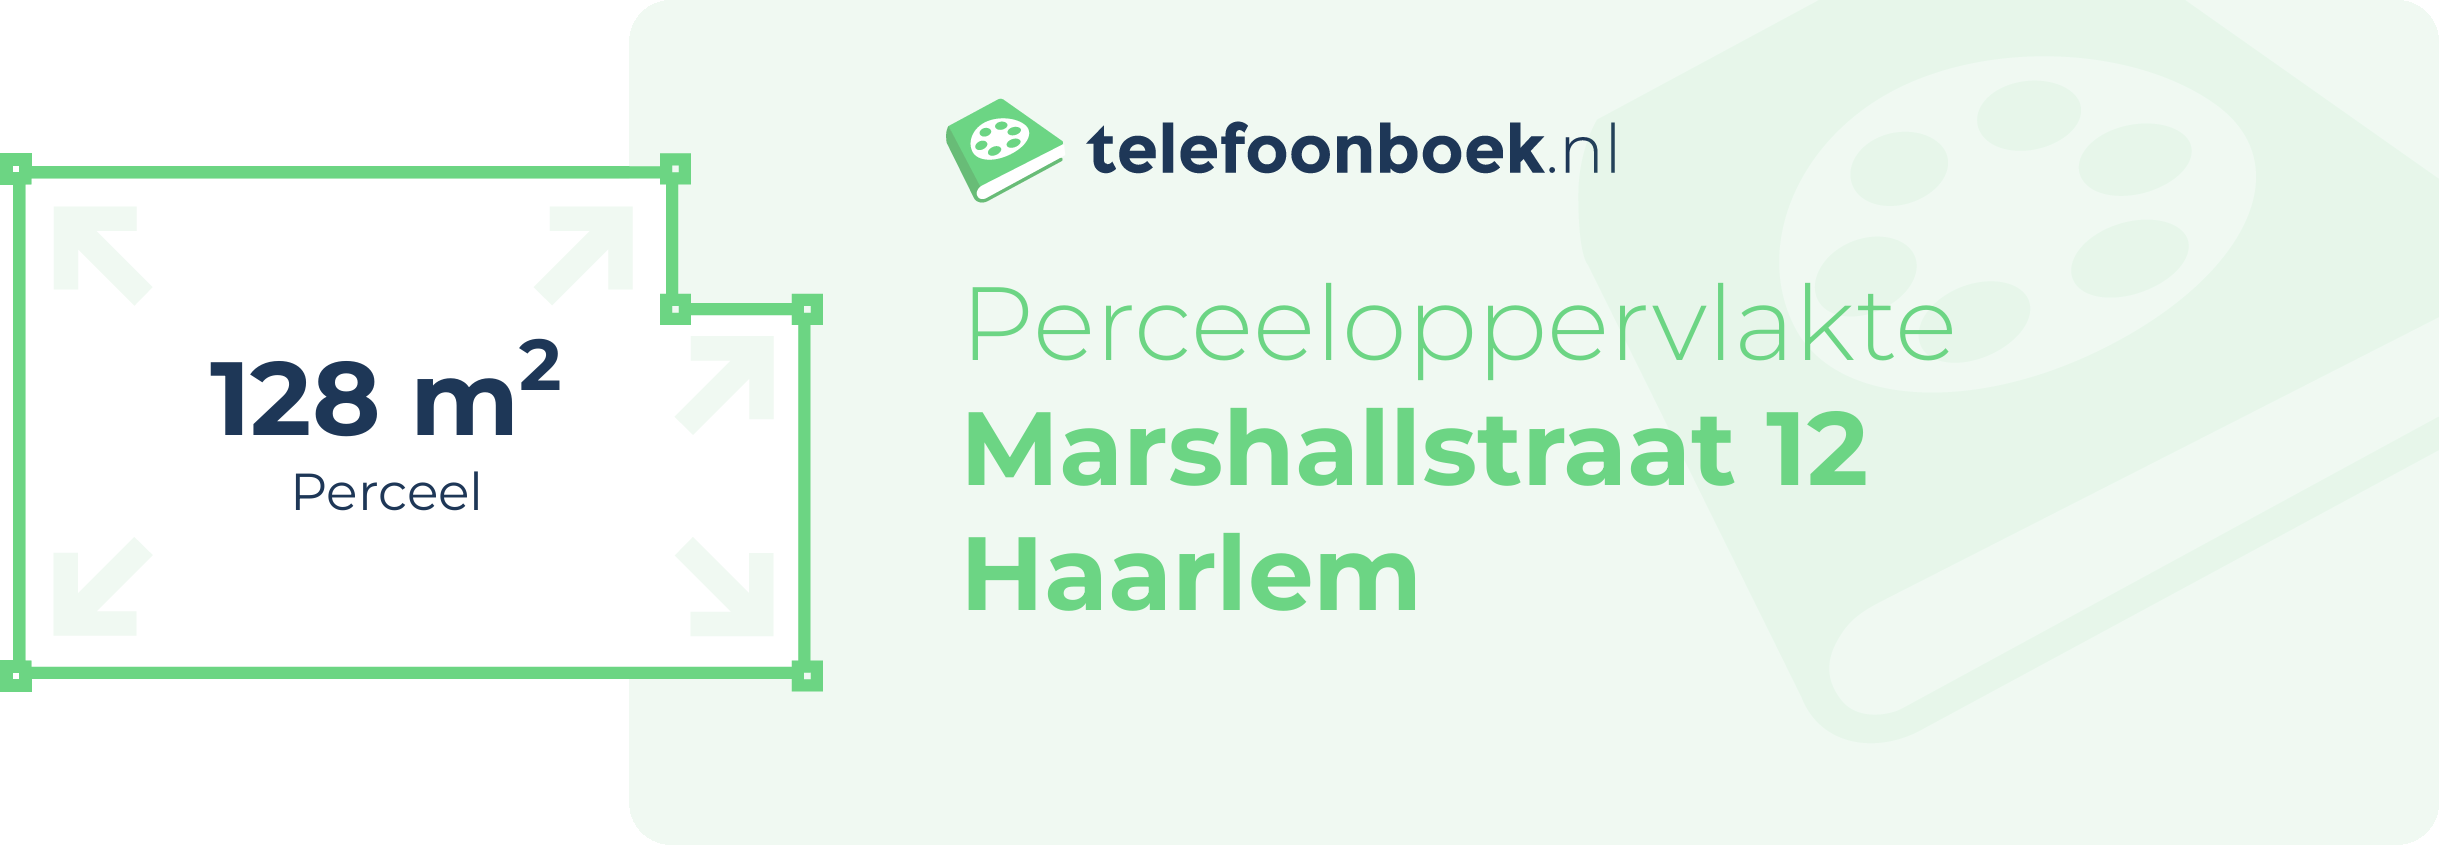 Perceeloppervlakte Marshallstraat 12 Haarlem